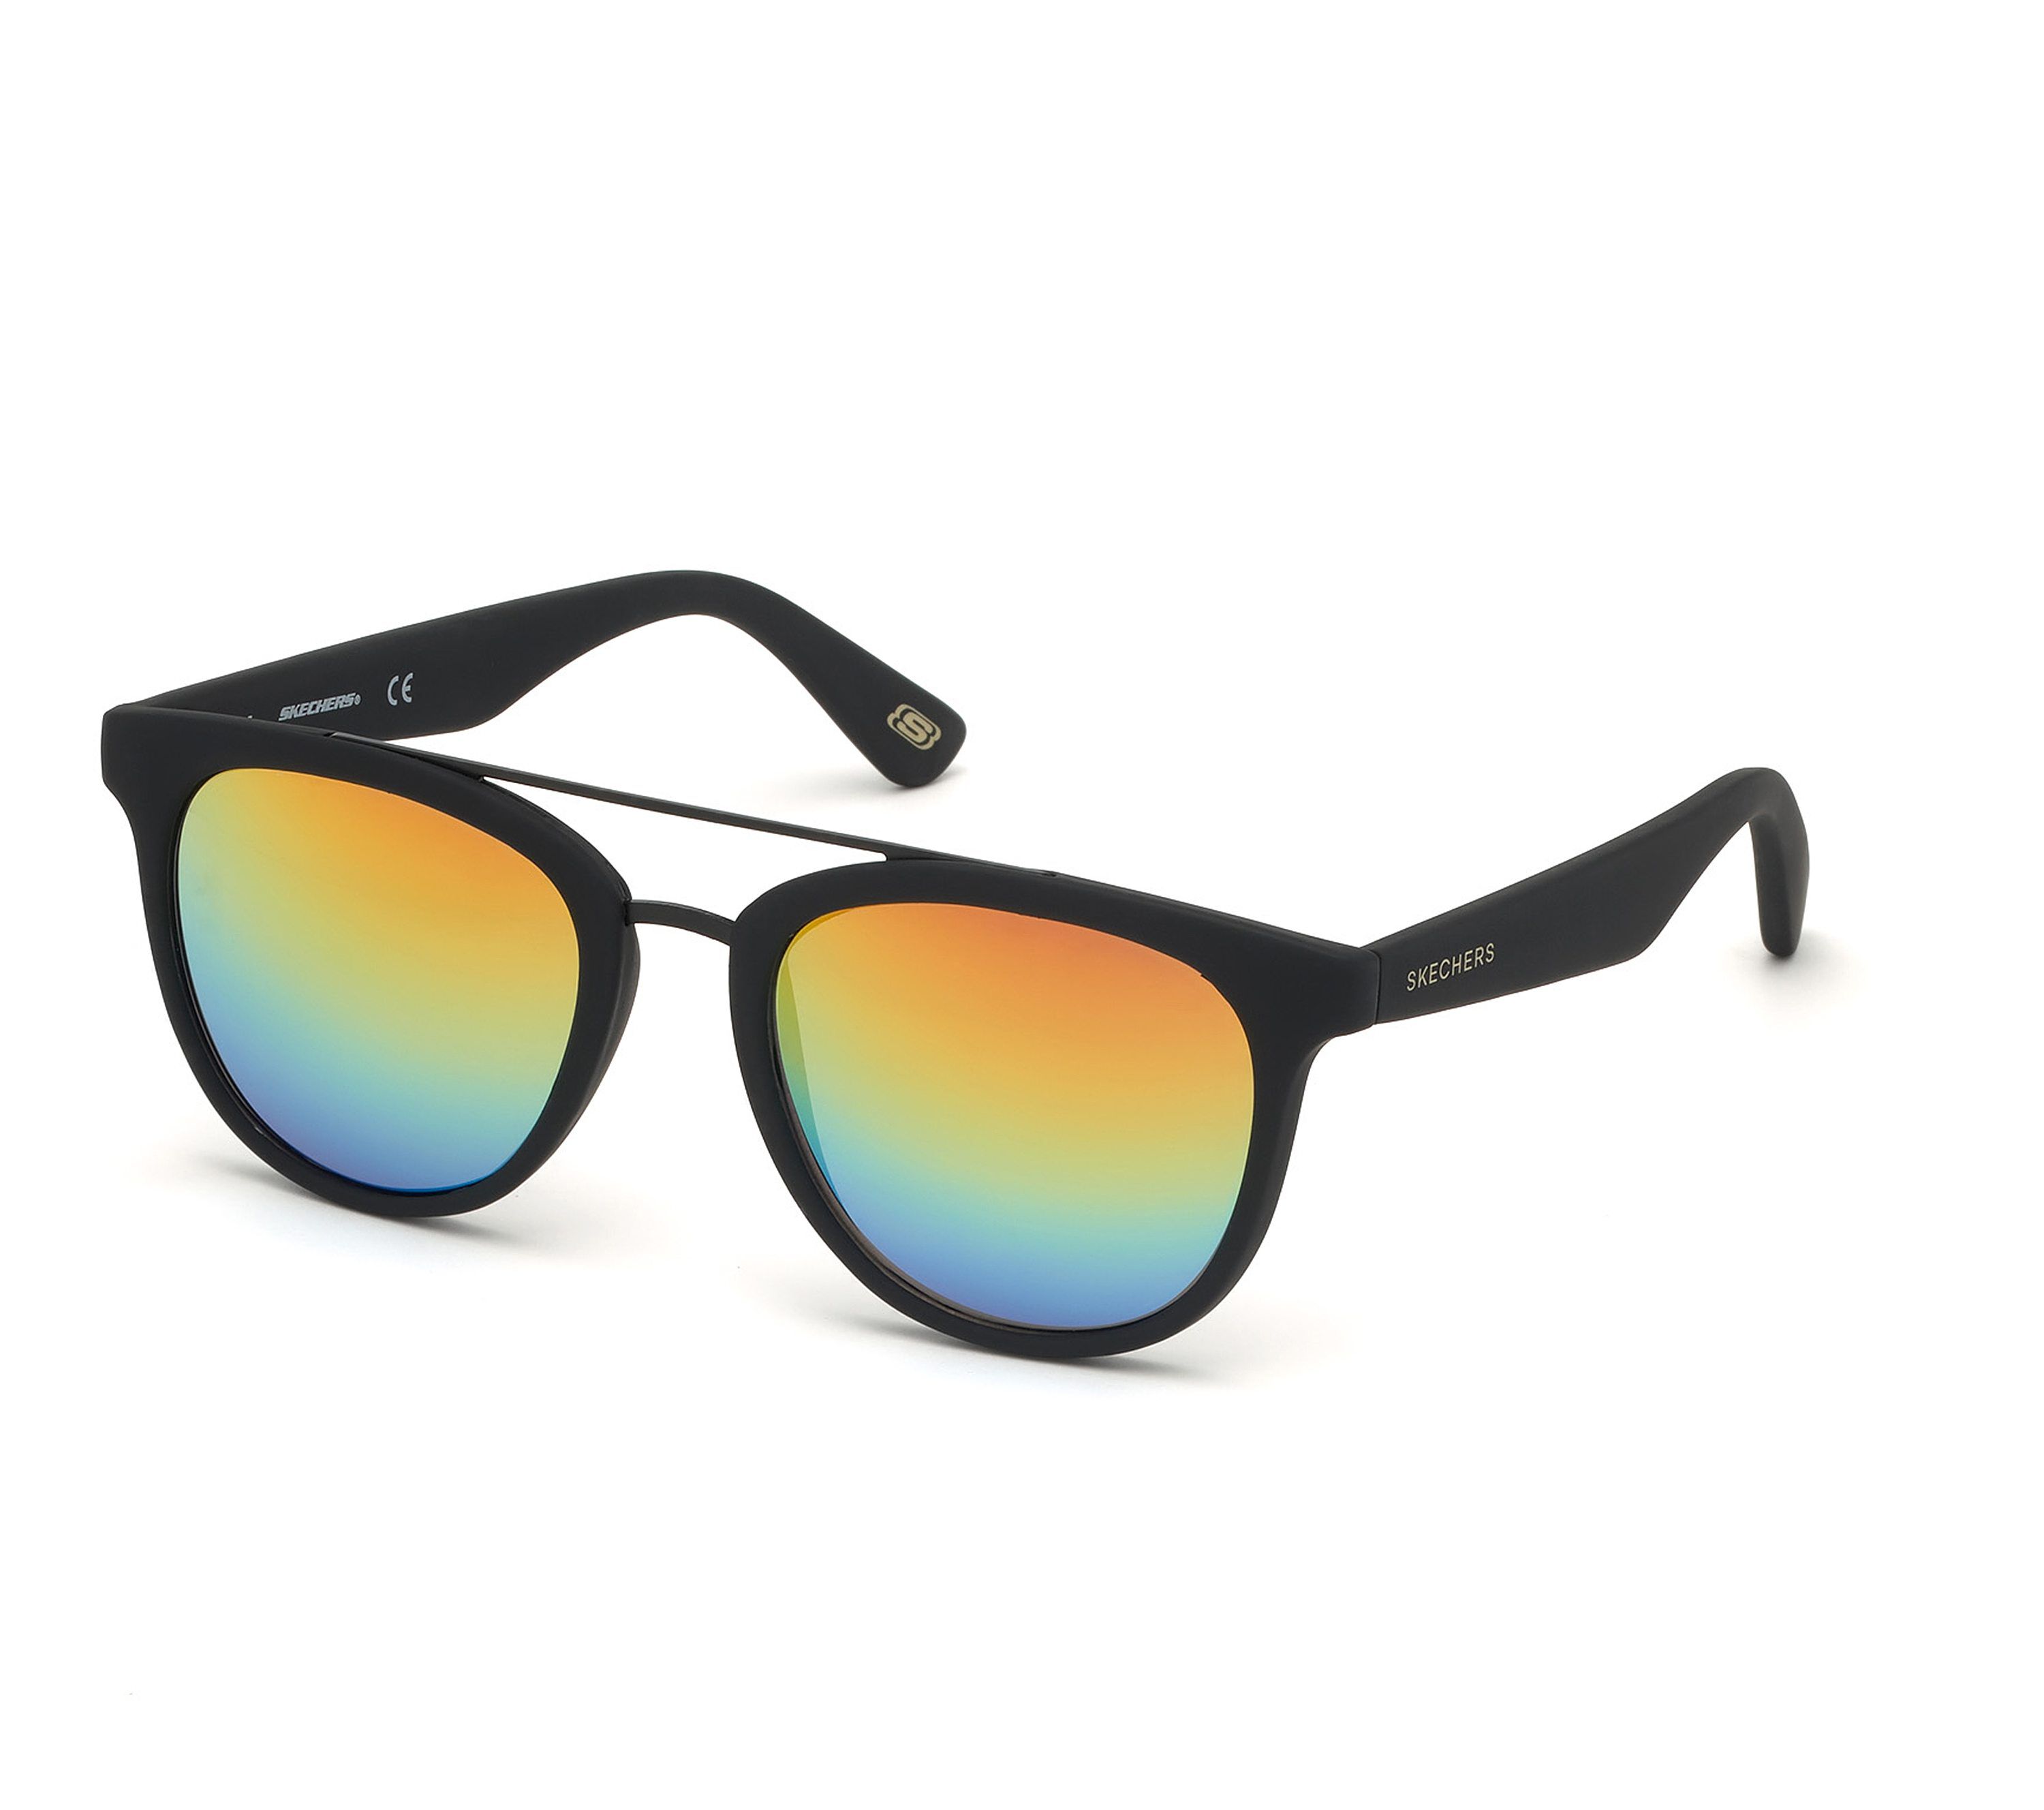 skechers sunglasses price